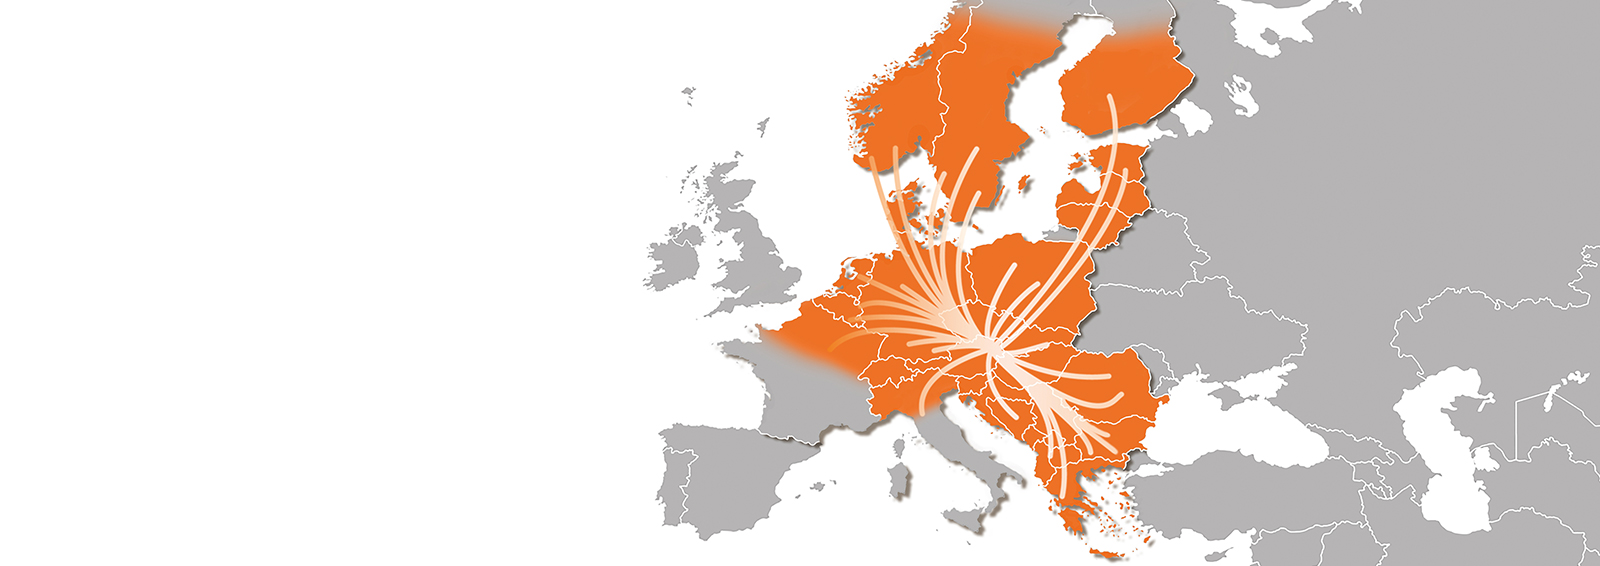 Corridor UnitCargo Transport Europe Scandinavia Balkans Middle East Orange Grey